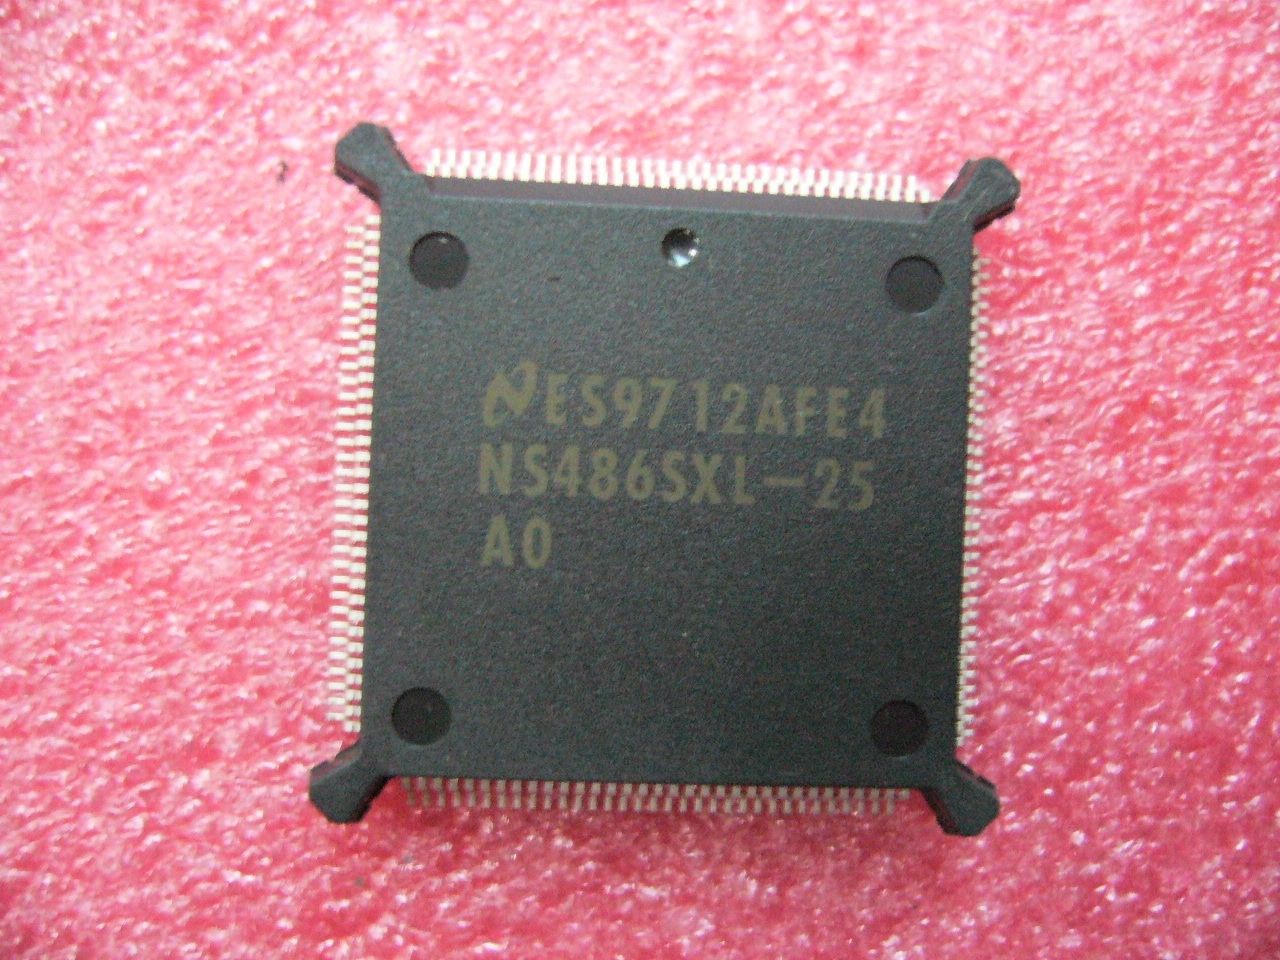 QTY 1x Vintage National Semi 486 CPU NS486SXL-25